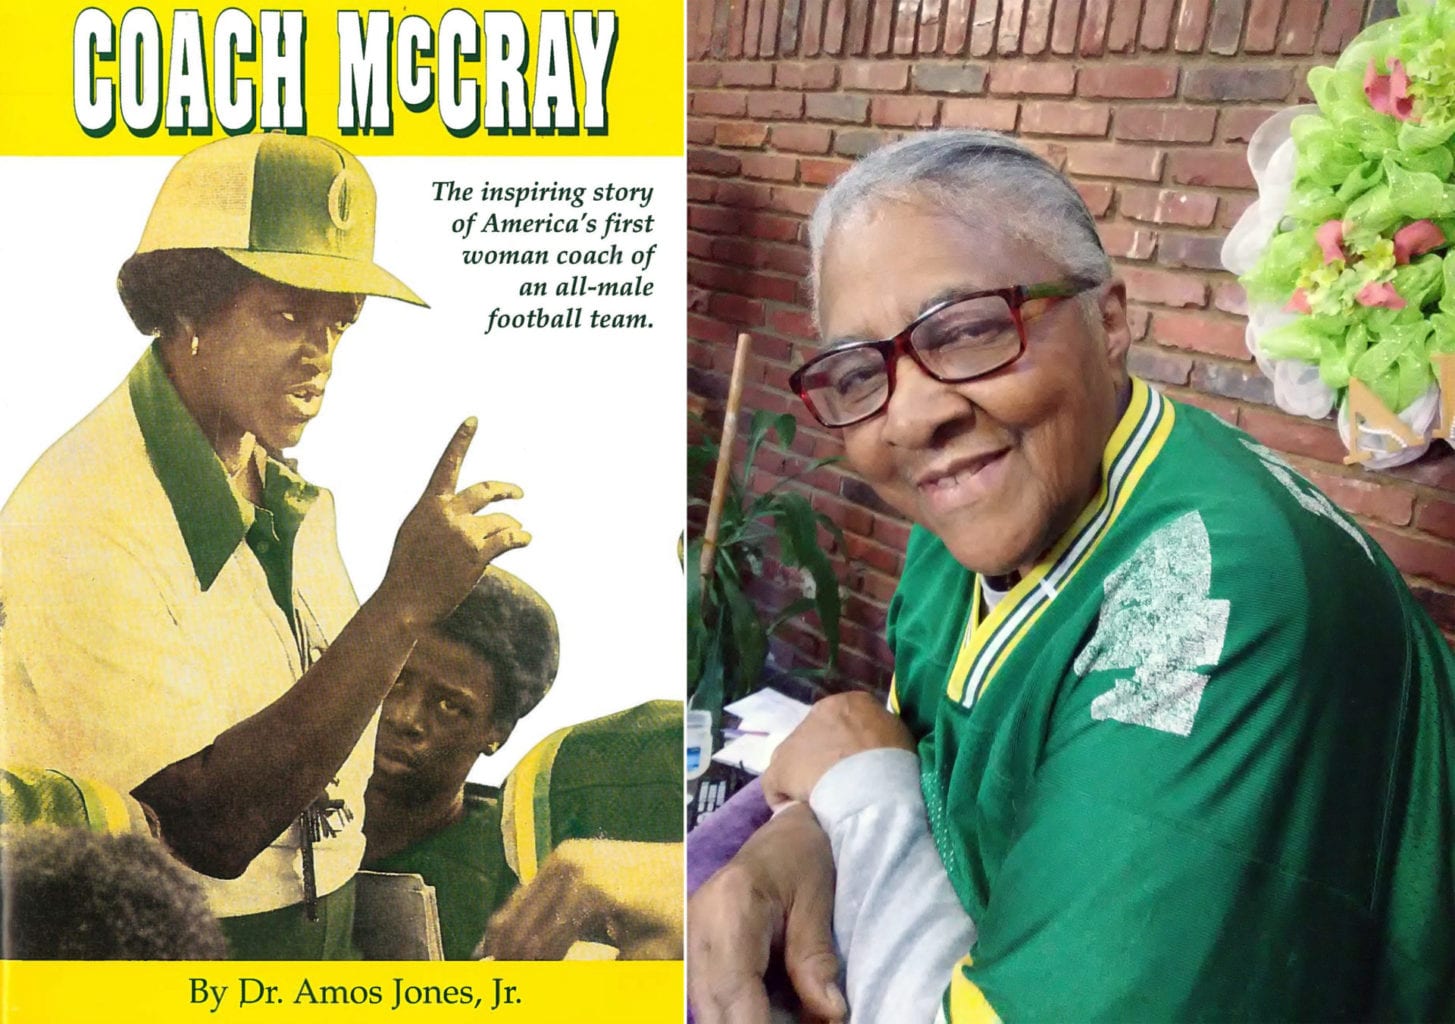 Female football coaches? Coach McCray blazed the way 